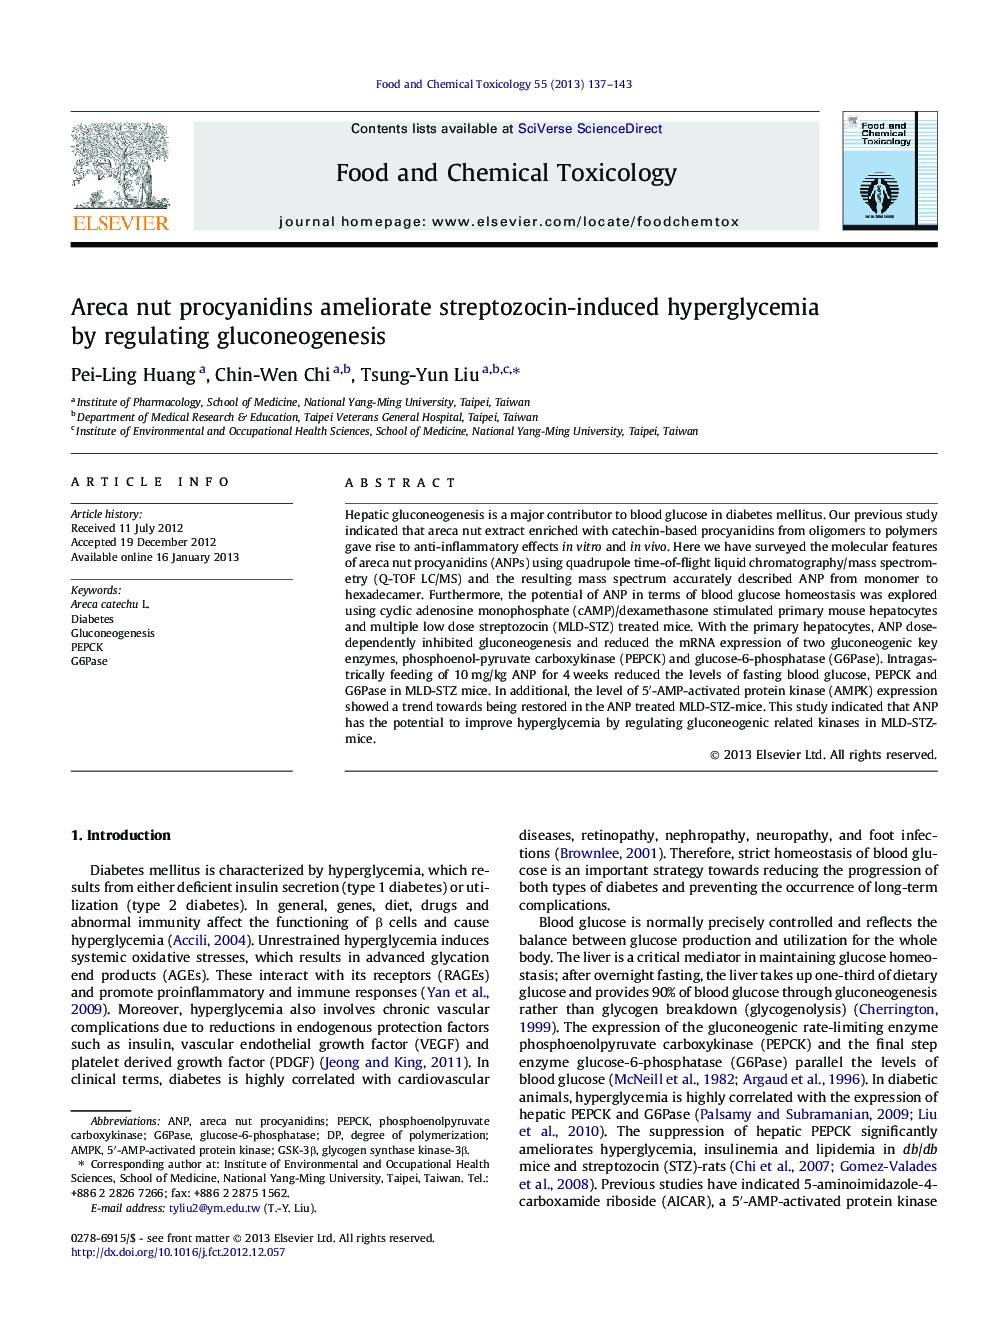 Areca nut procyanidins ameliorate streptozocin-induced hyperglycemia by regulating gluconeogenesis